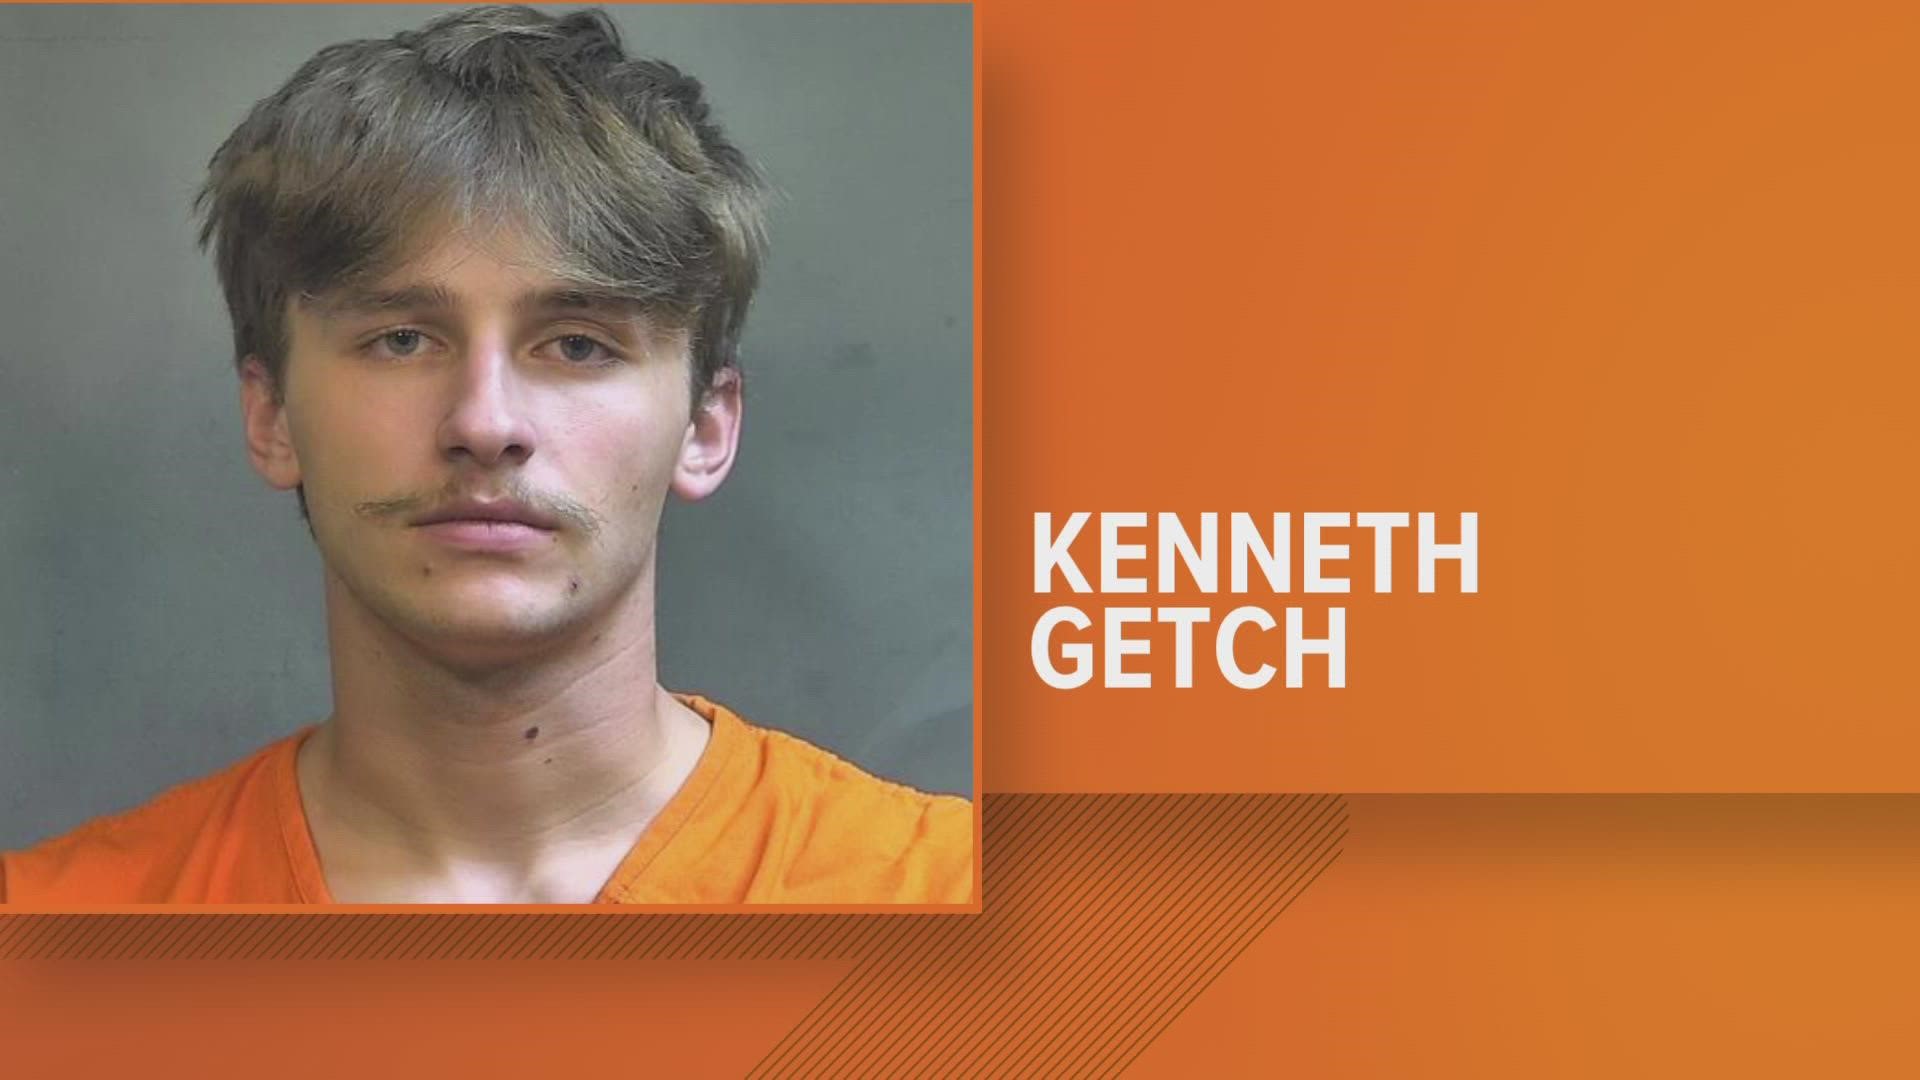 Kenneth Getch, 18, was arrested Friday on a warrant for intimidation, a Level 6 felony.